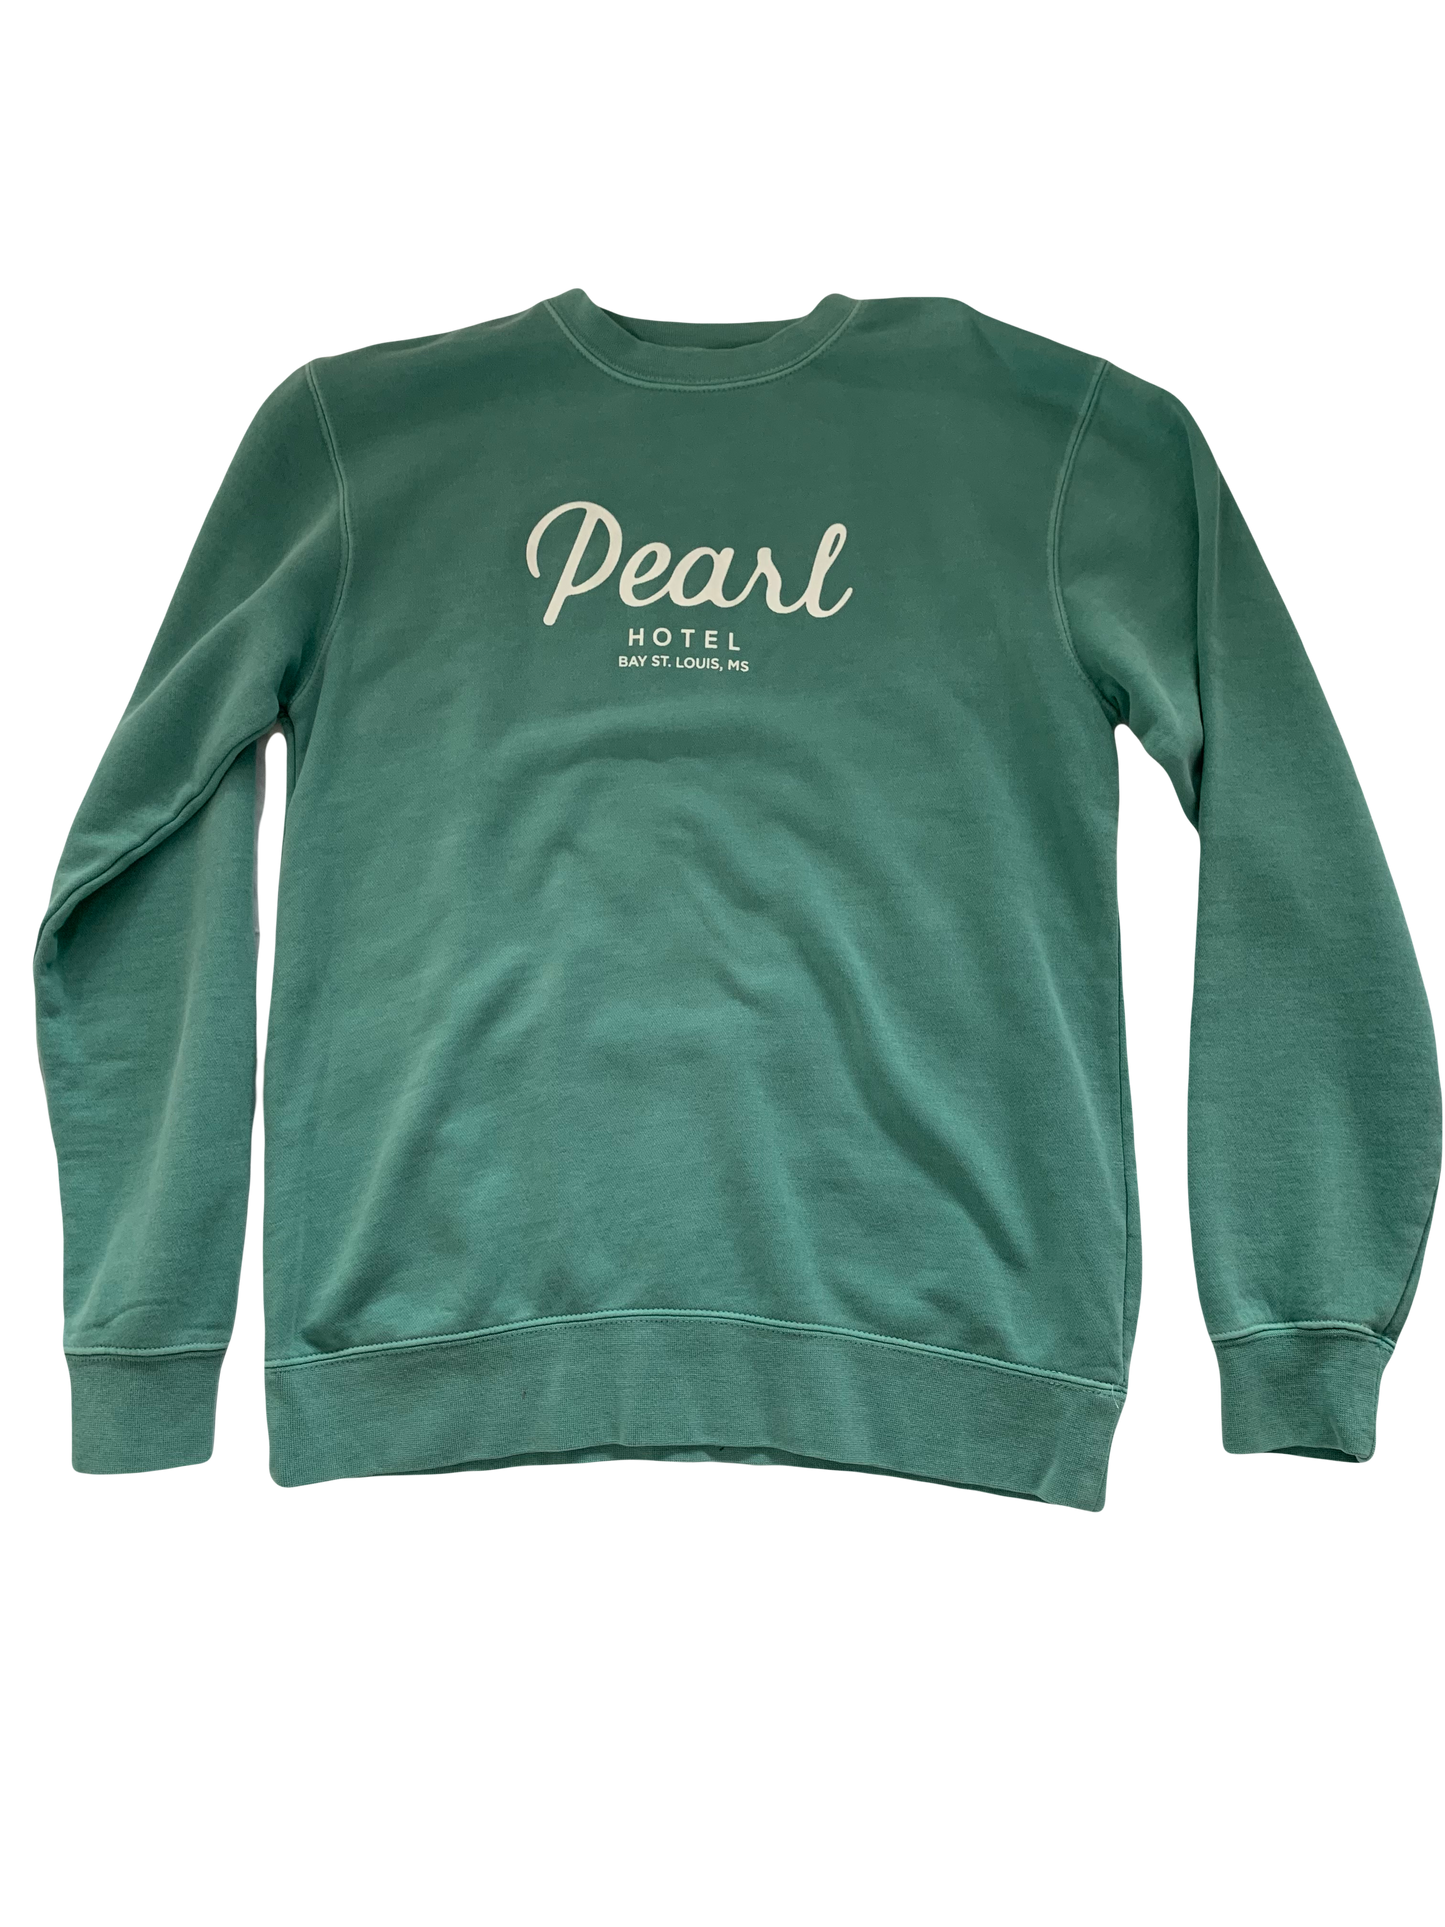 Pearl Hotel Sweatshirt